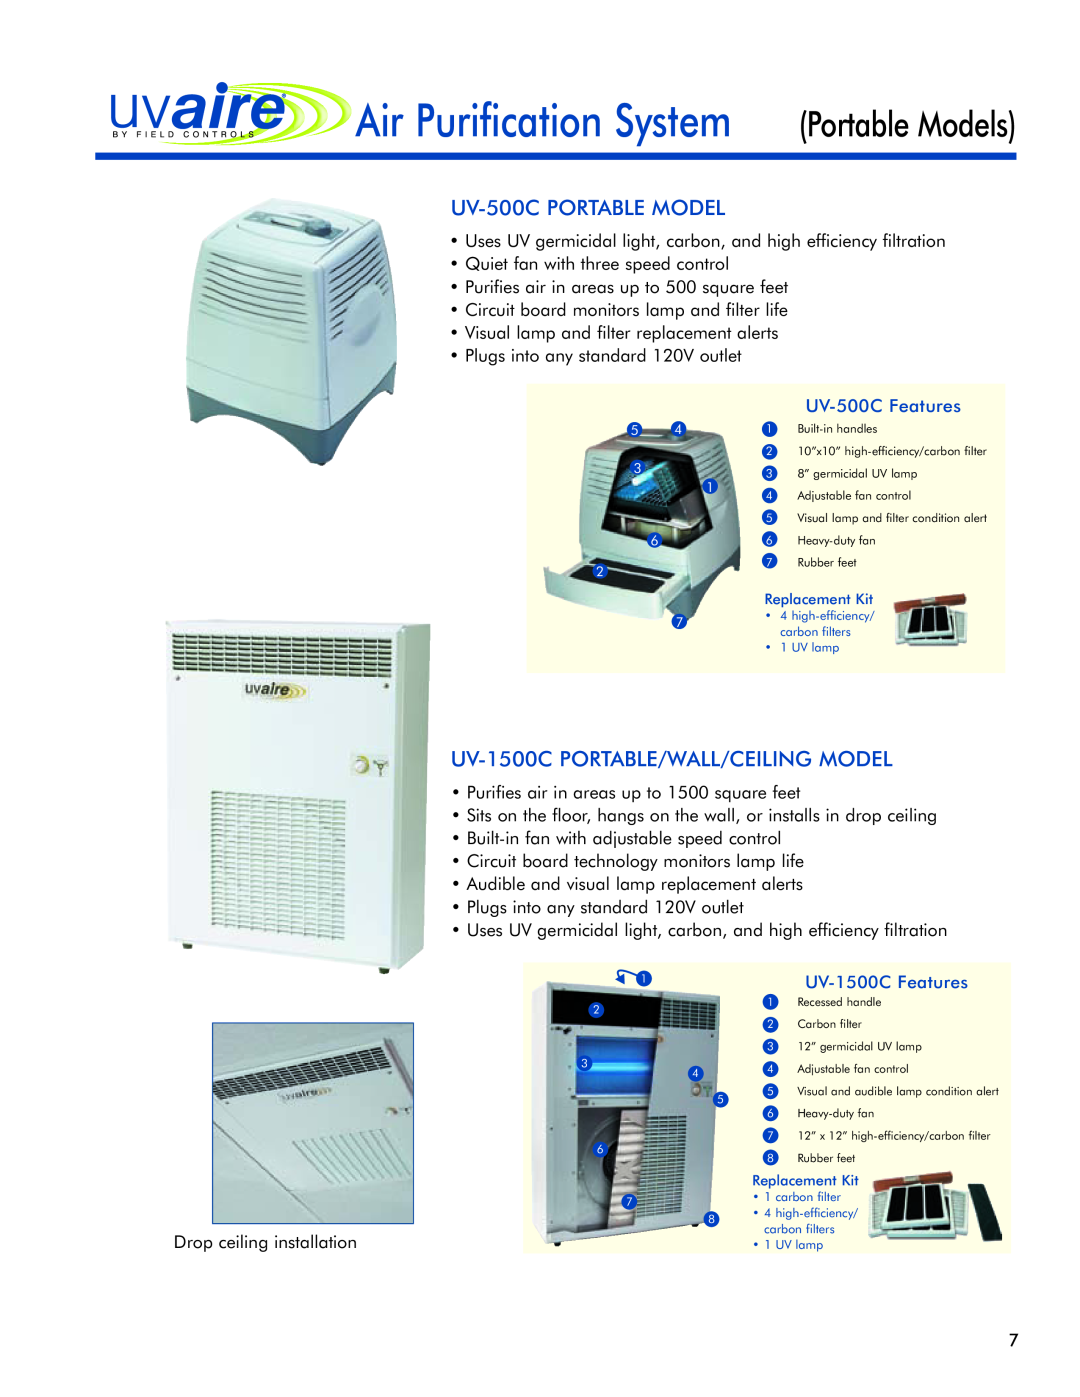 Field Controls 24v manual UV-500CPORTABLE MODEL, UV-1500CPORTABLE/WALL/CEILING MODEL, UV-500CFeatures, UV-1500CFeatures 